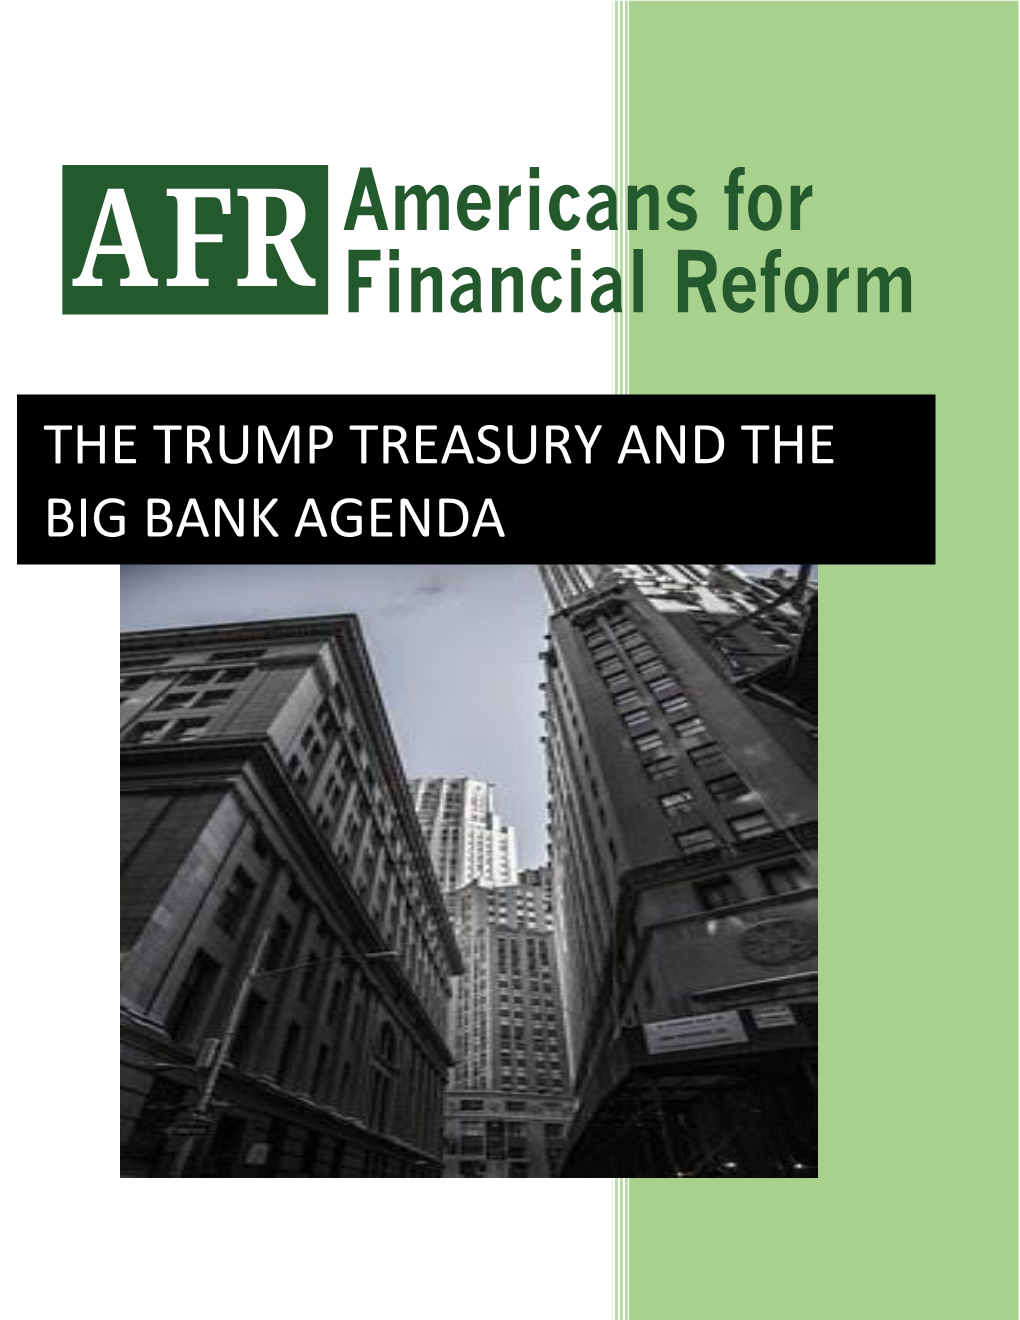 The Trump Treasury and the Big Bank Agenda